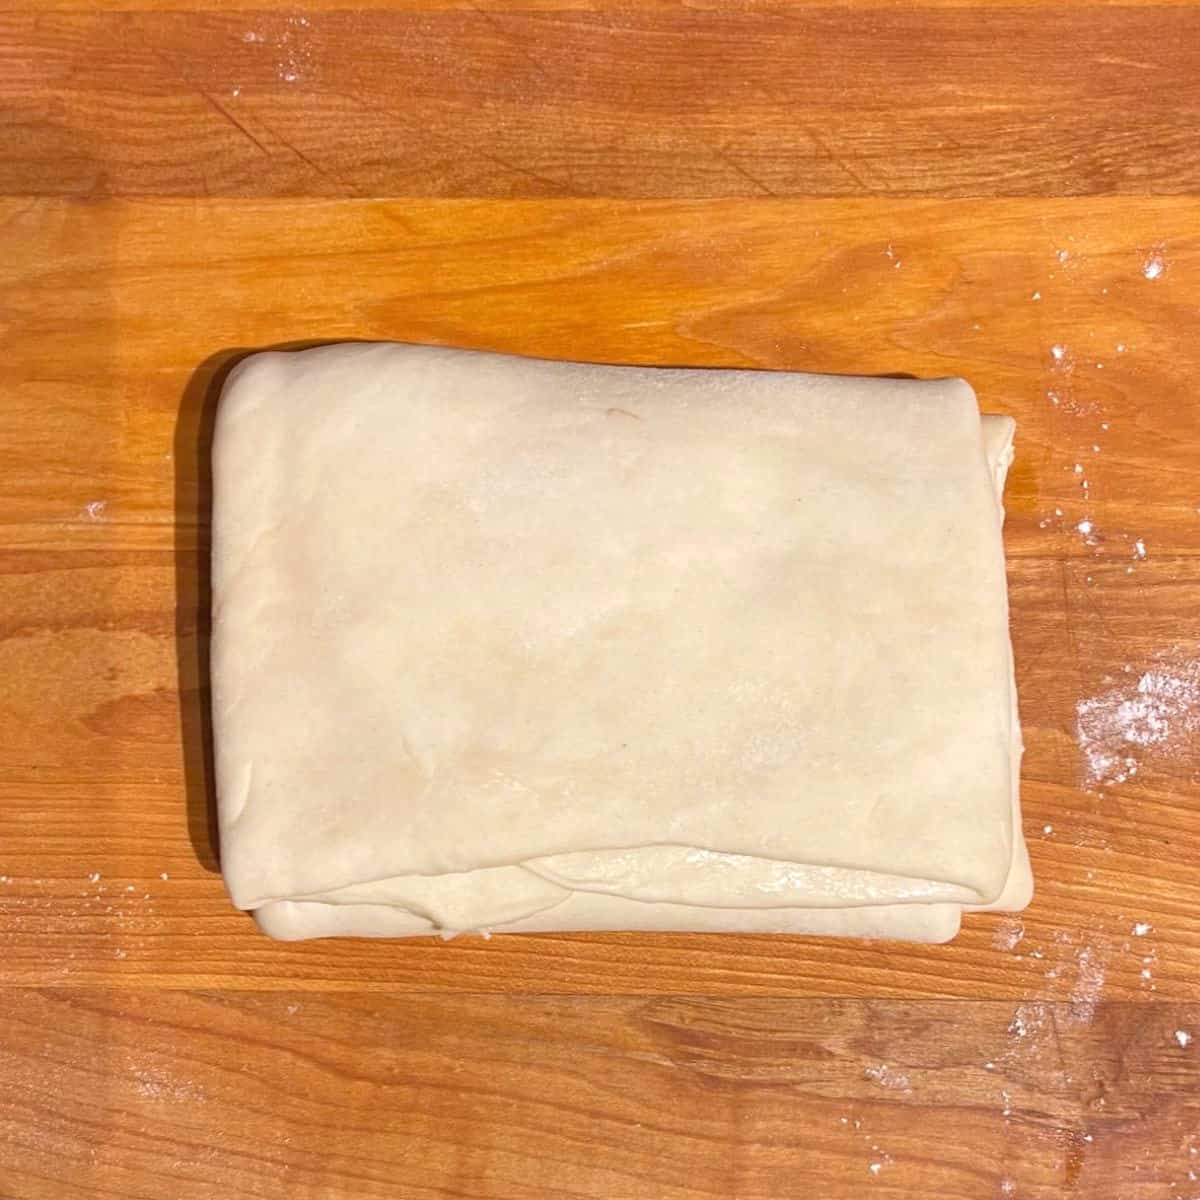 Paratha dough after folding.